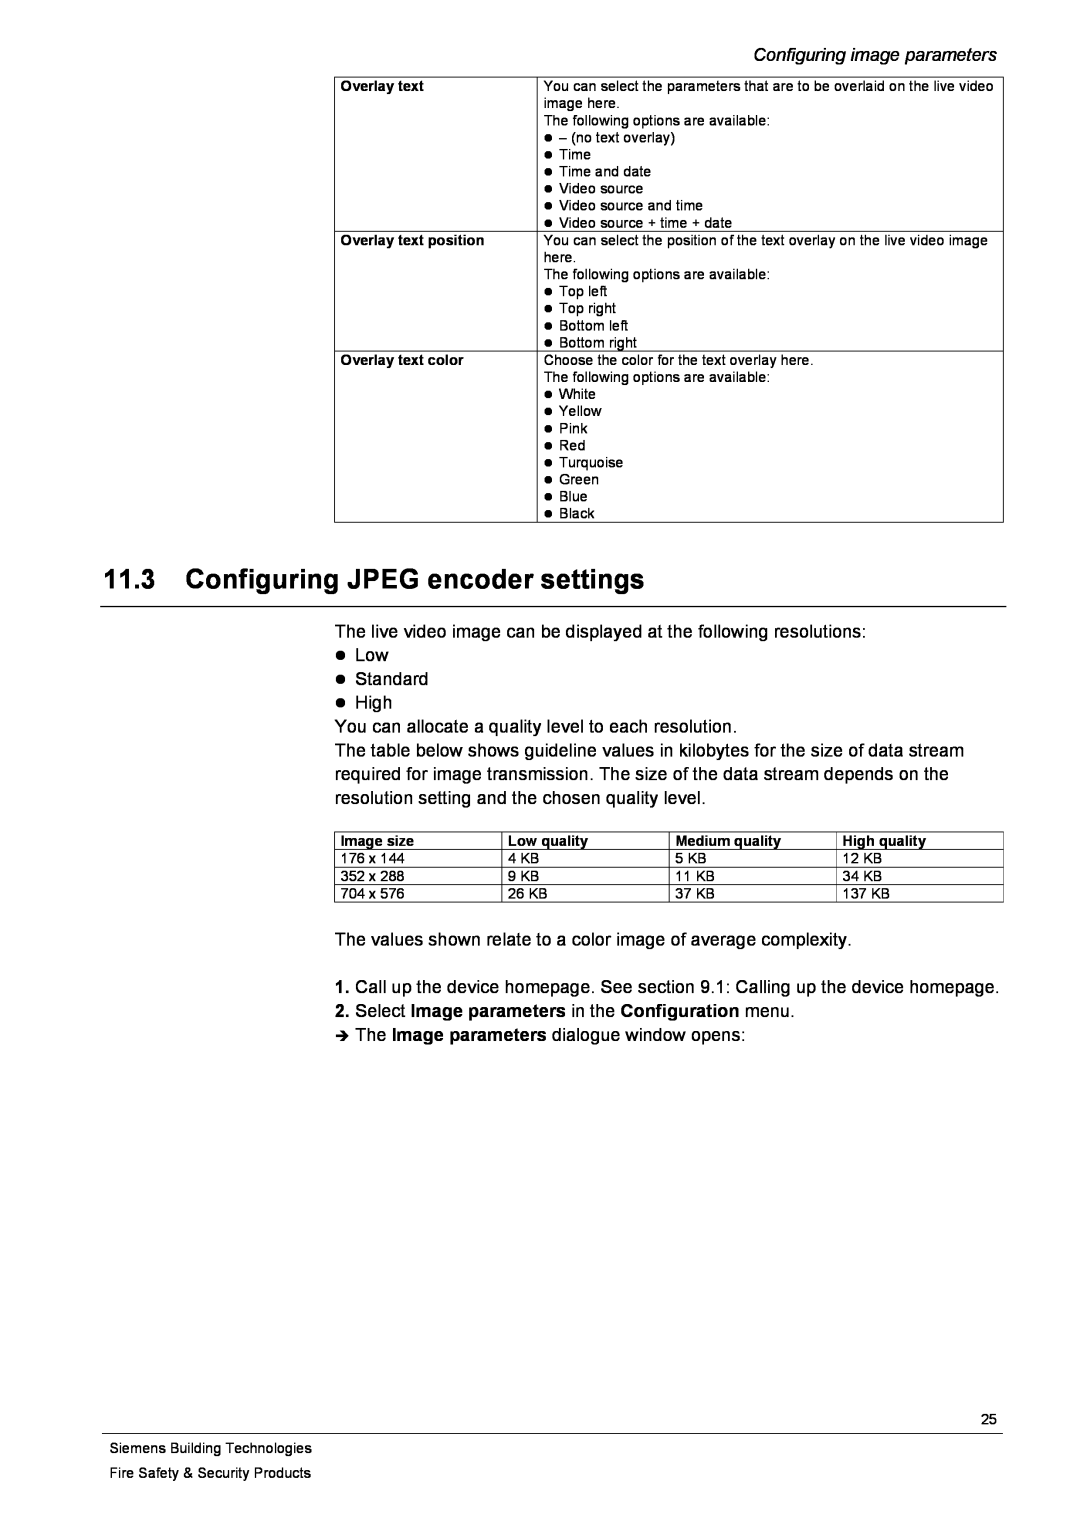 Siemens CFVA-IP user manual 11.3Configuring JPEG encoder settings 